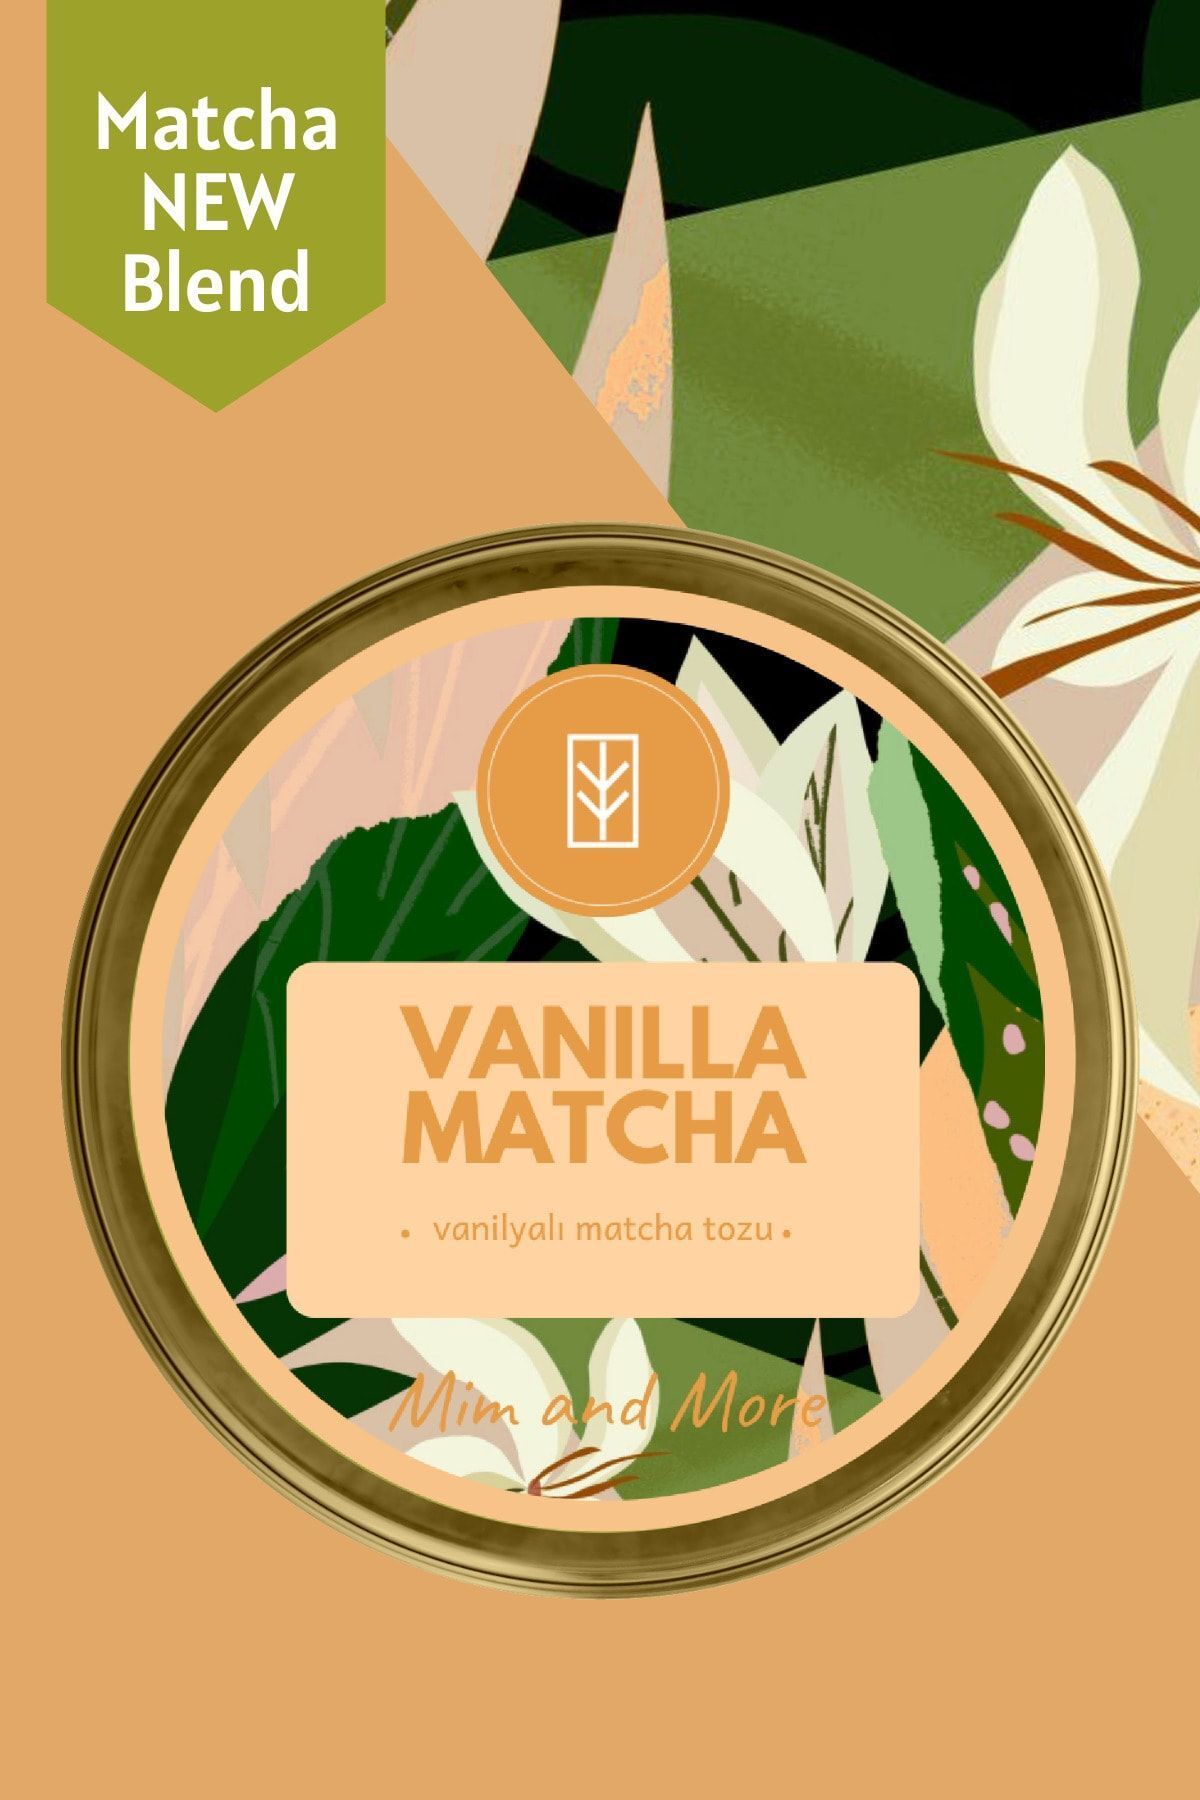 Mim and More Vanilla Matcha - Vanilyalı Matcha 25 gr